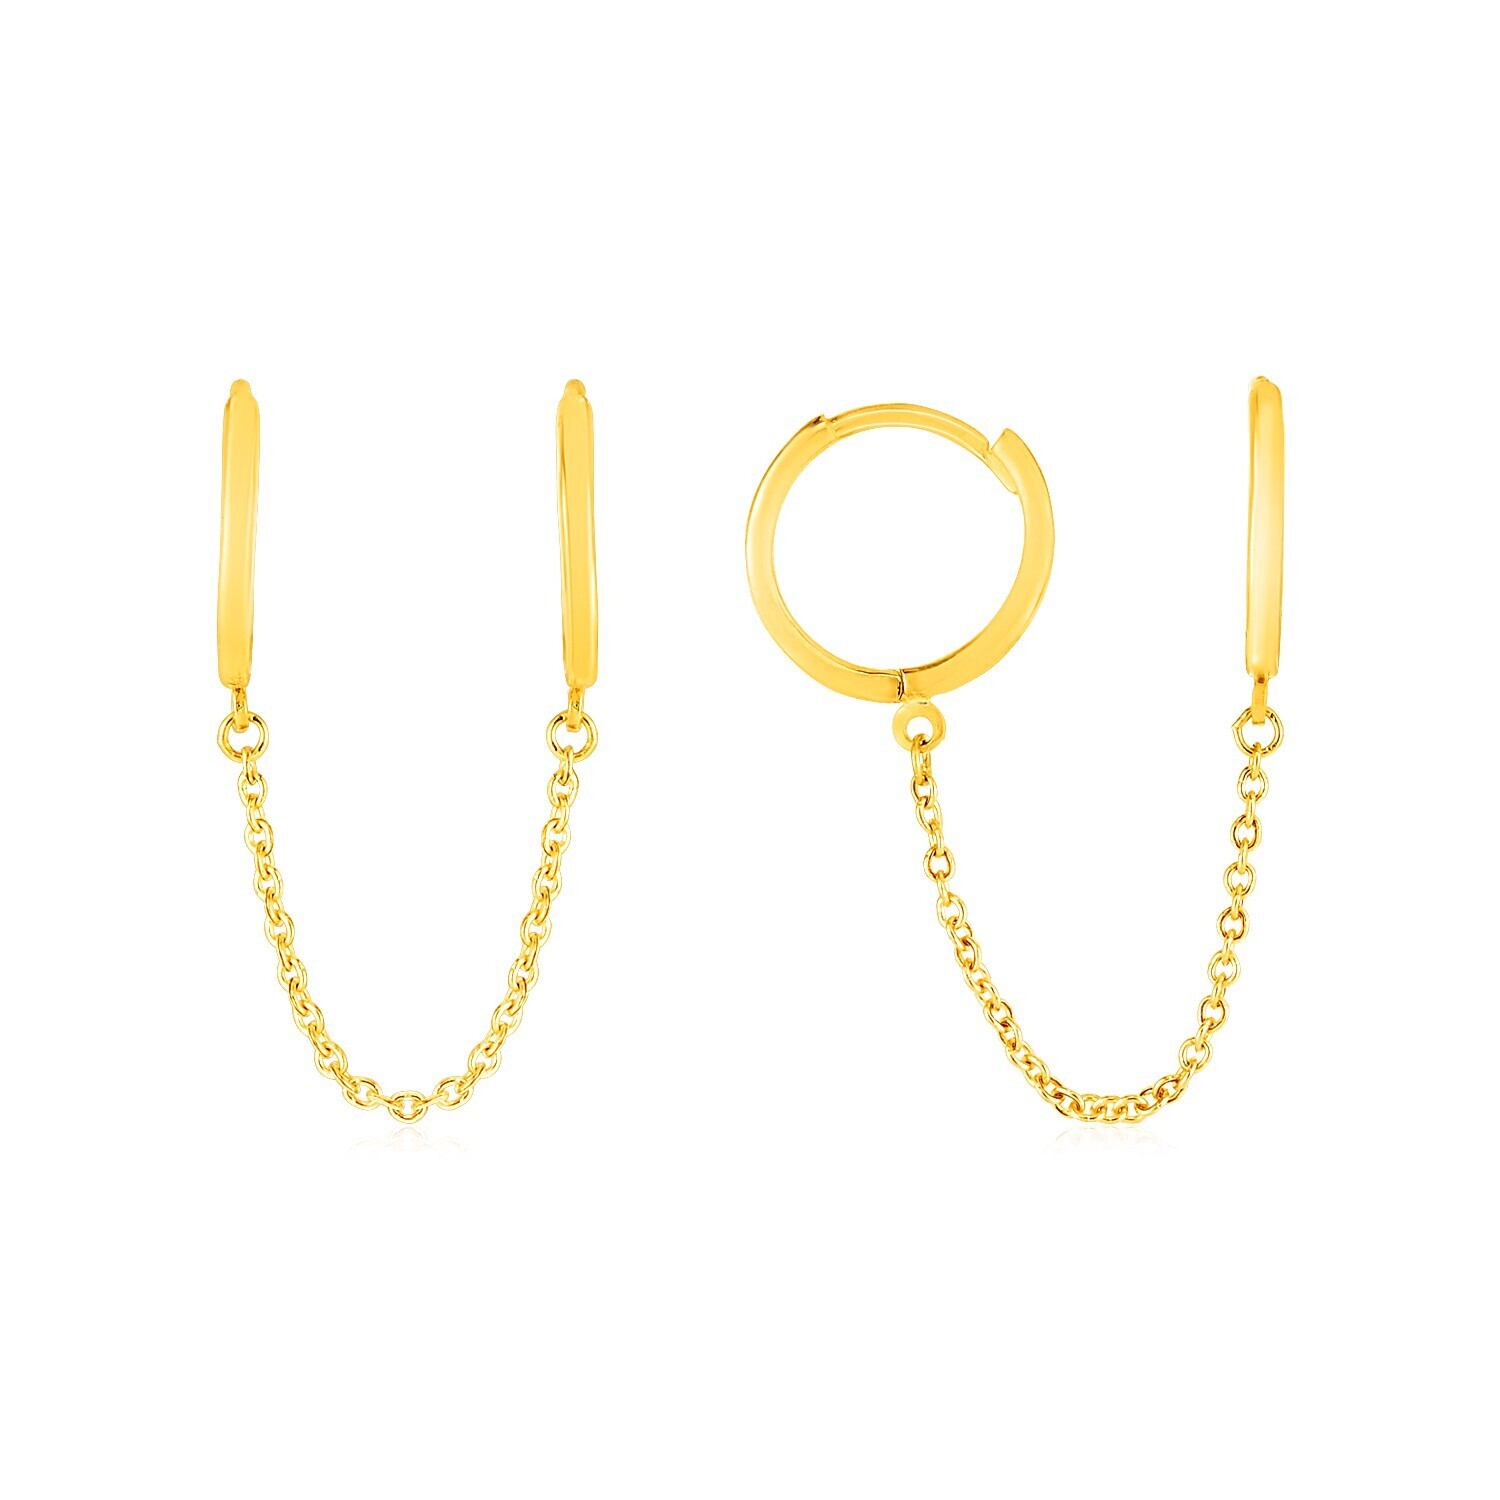 14k Yellow Gold Two Hole Huggie Style Hoop Earrings